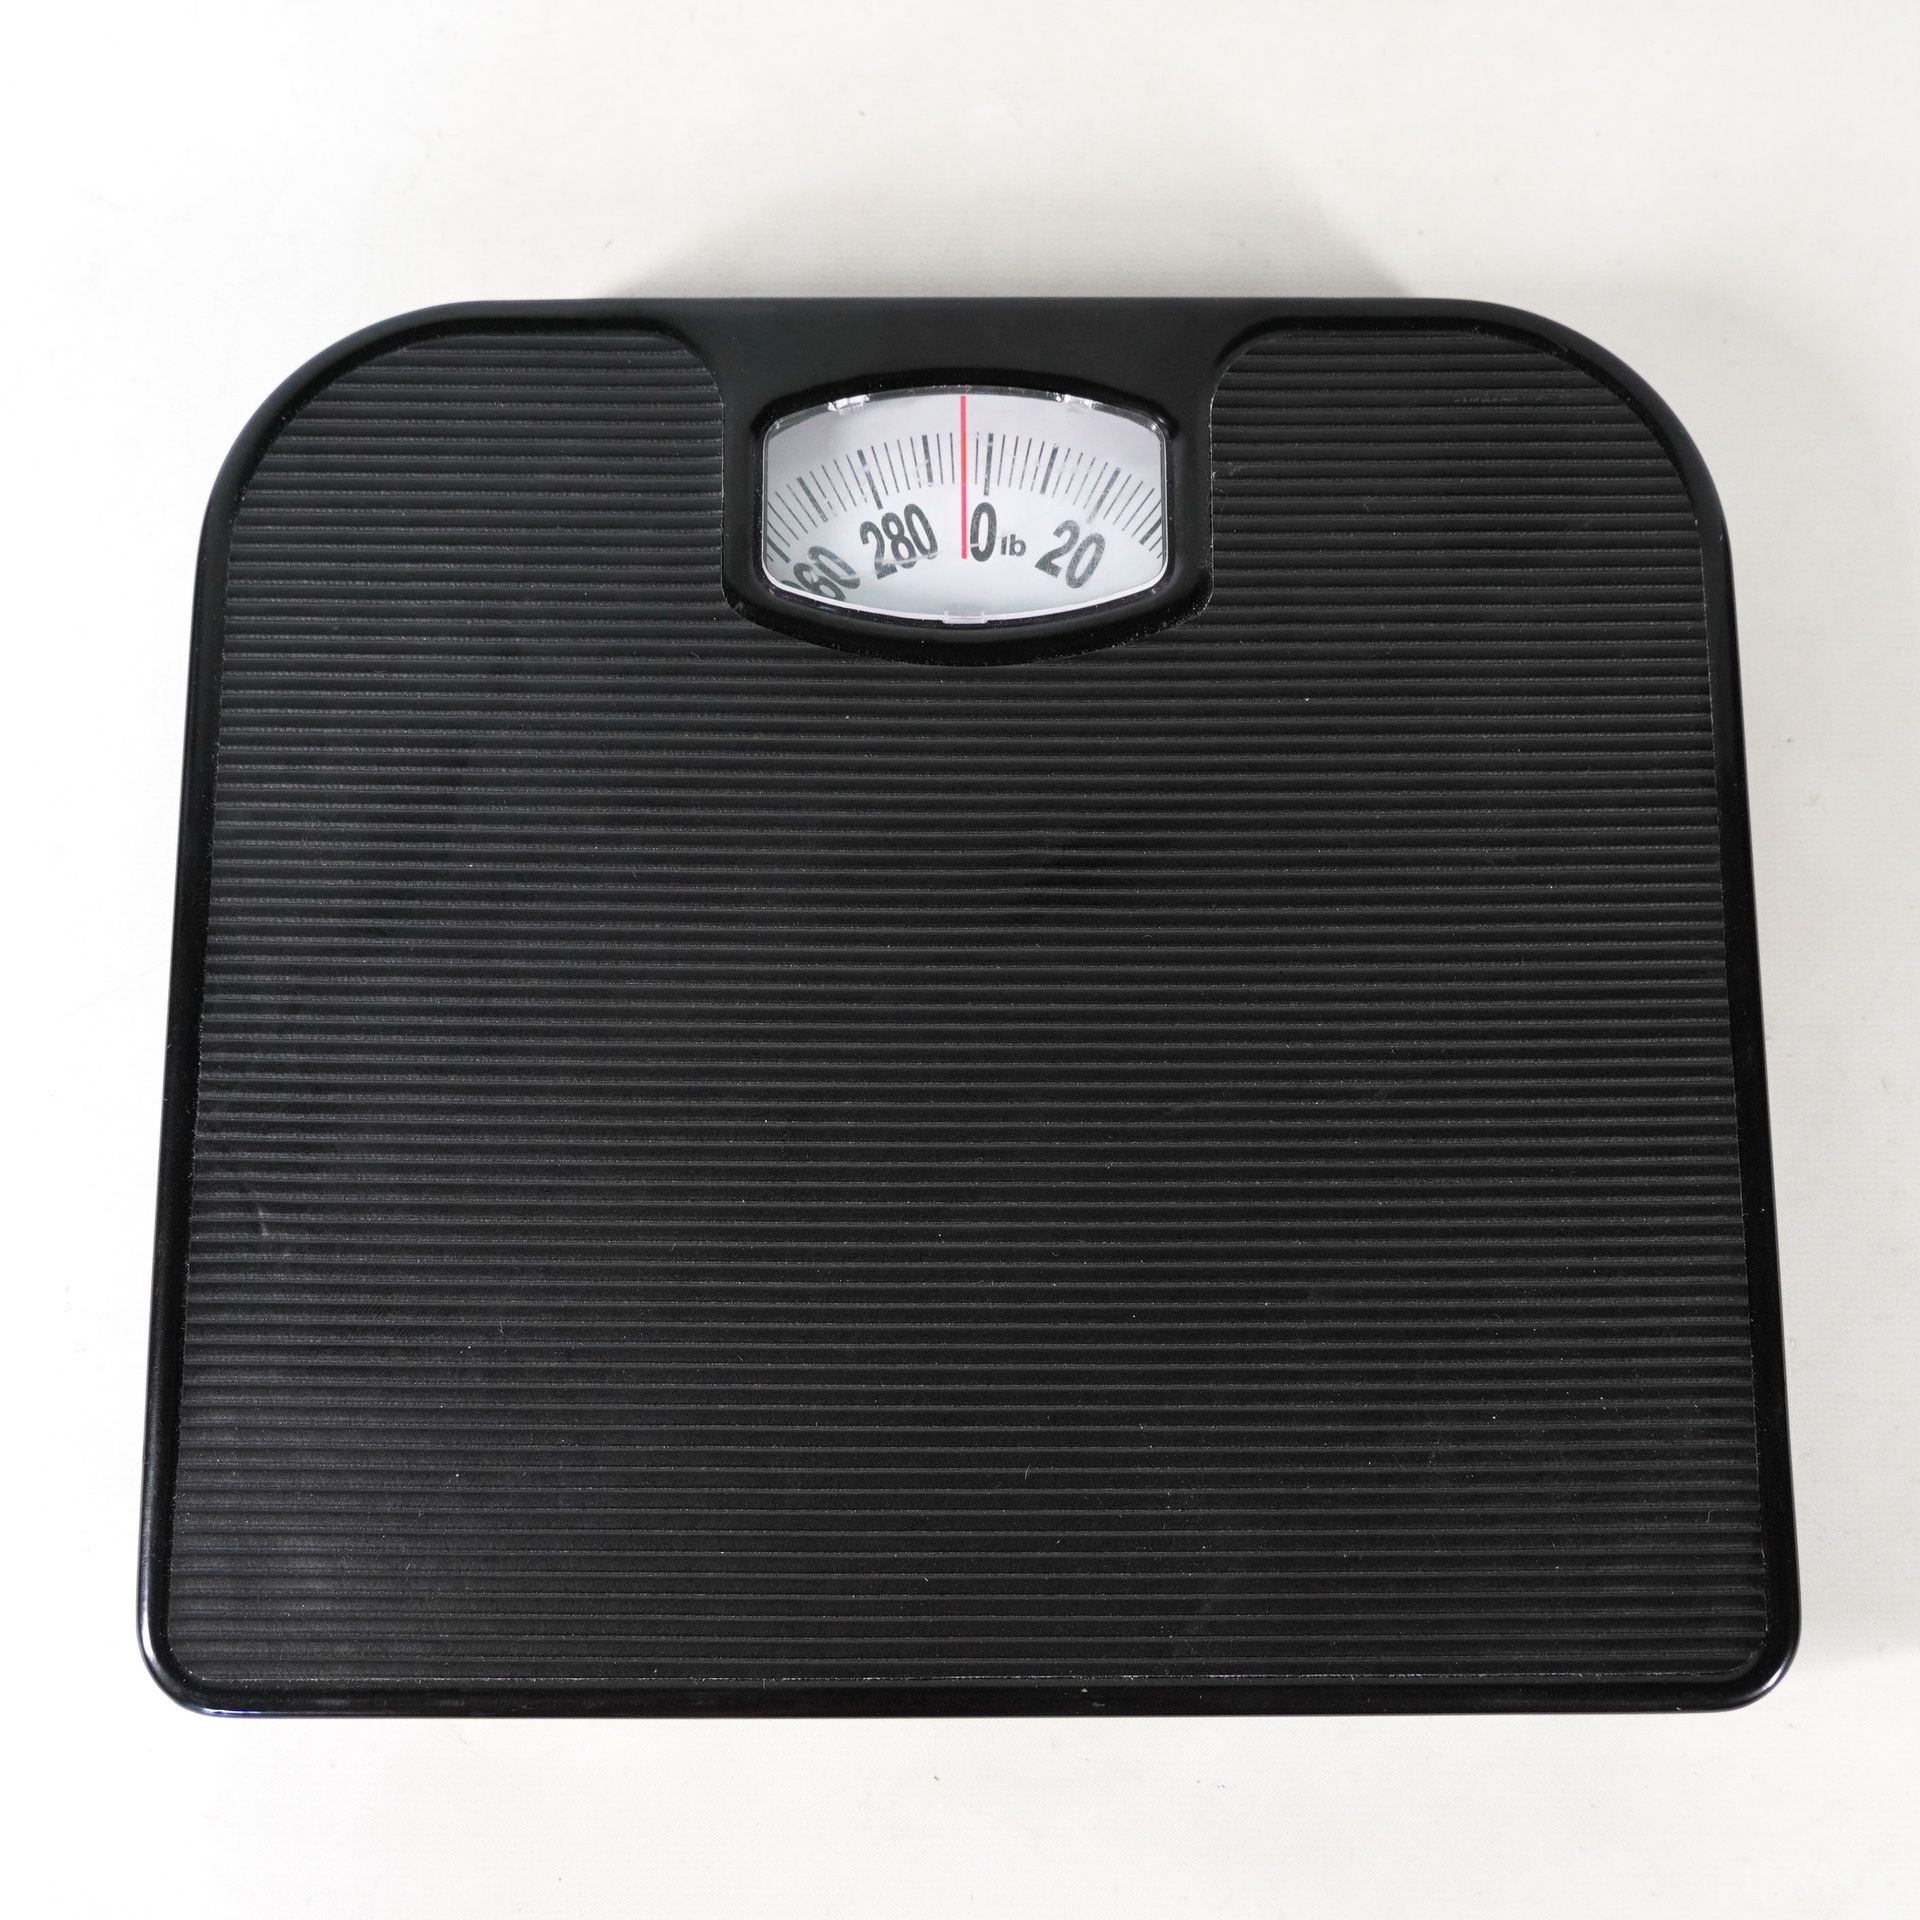 11" MS Analog Weighing Bathroom Scale Black Model BR2016STBK 